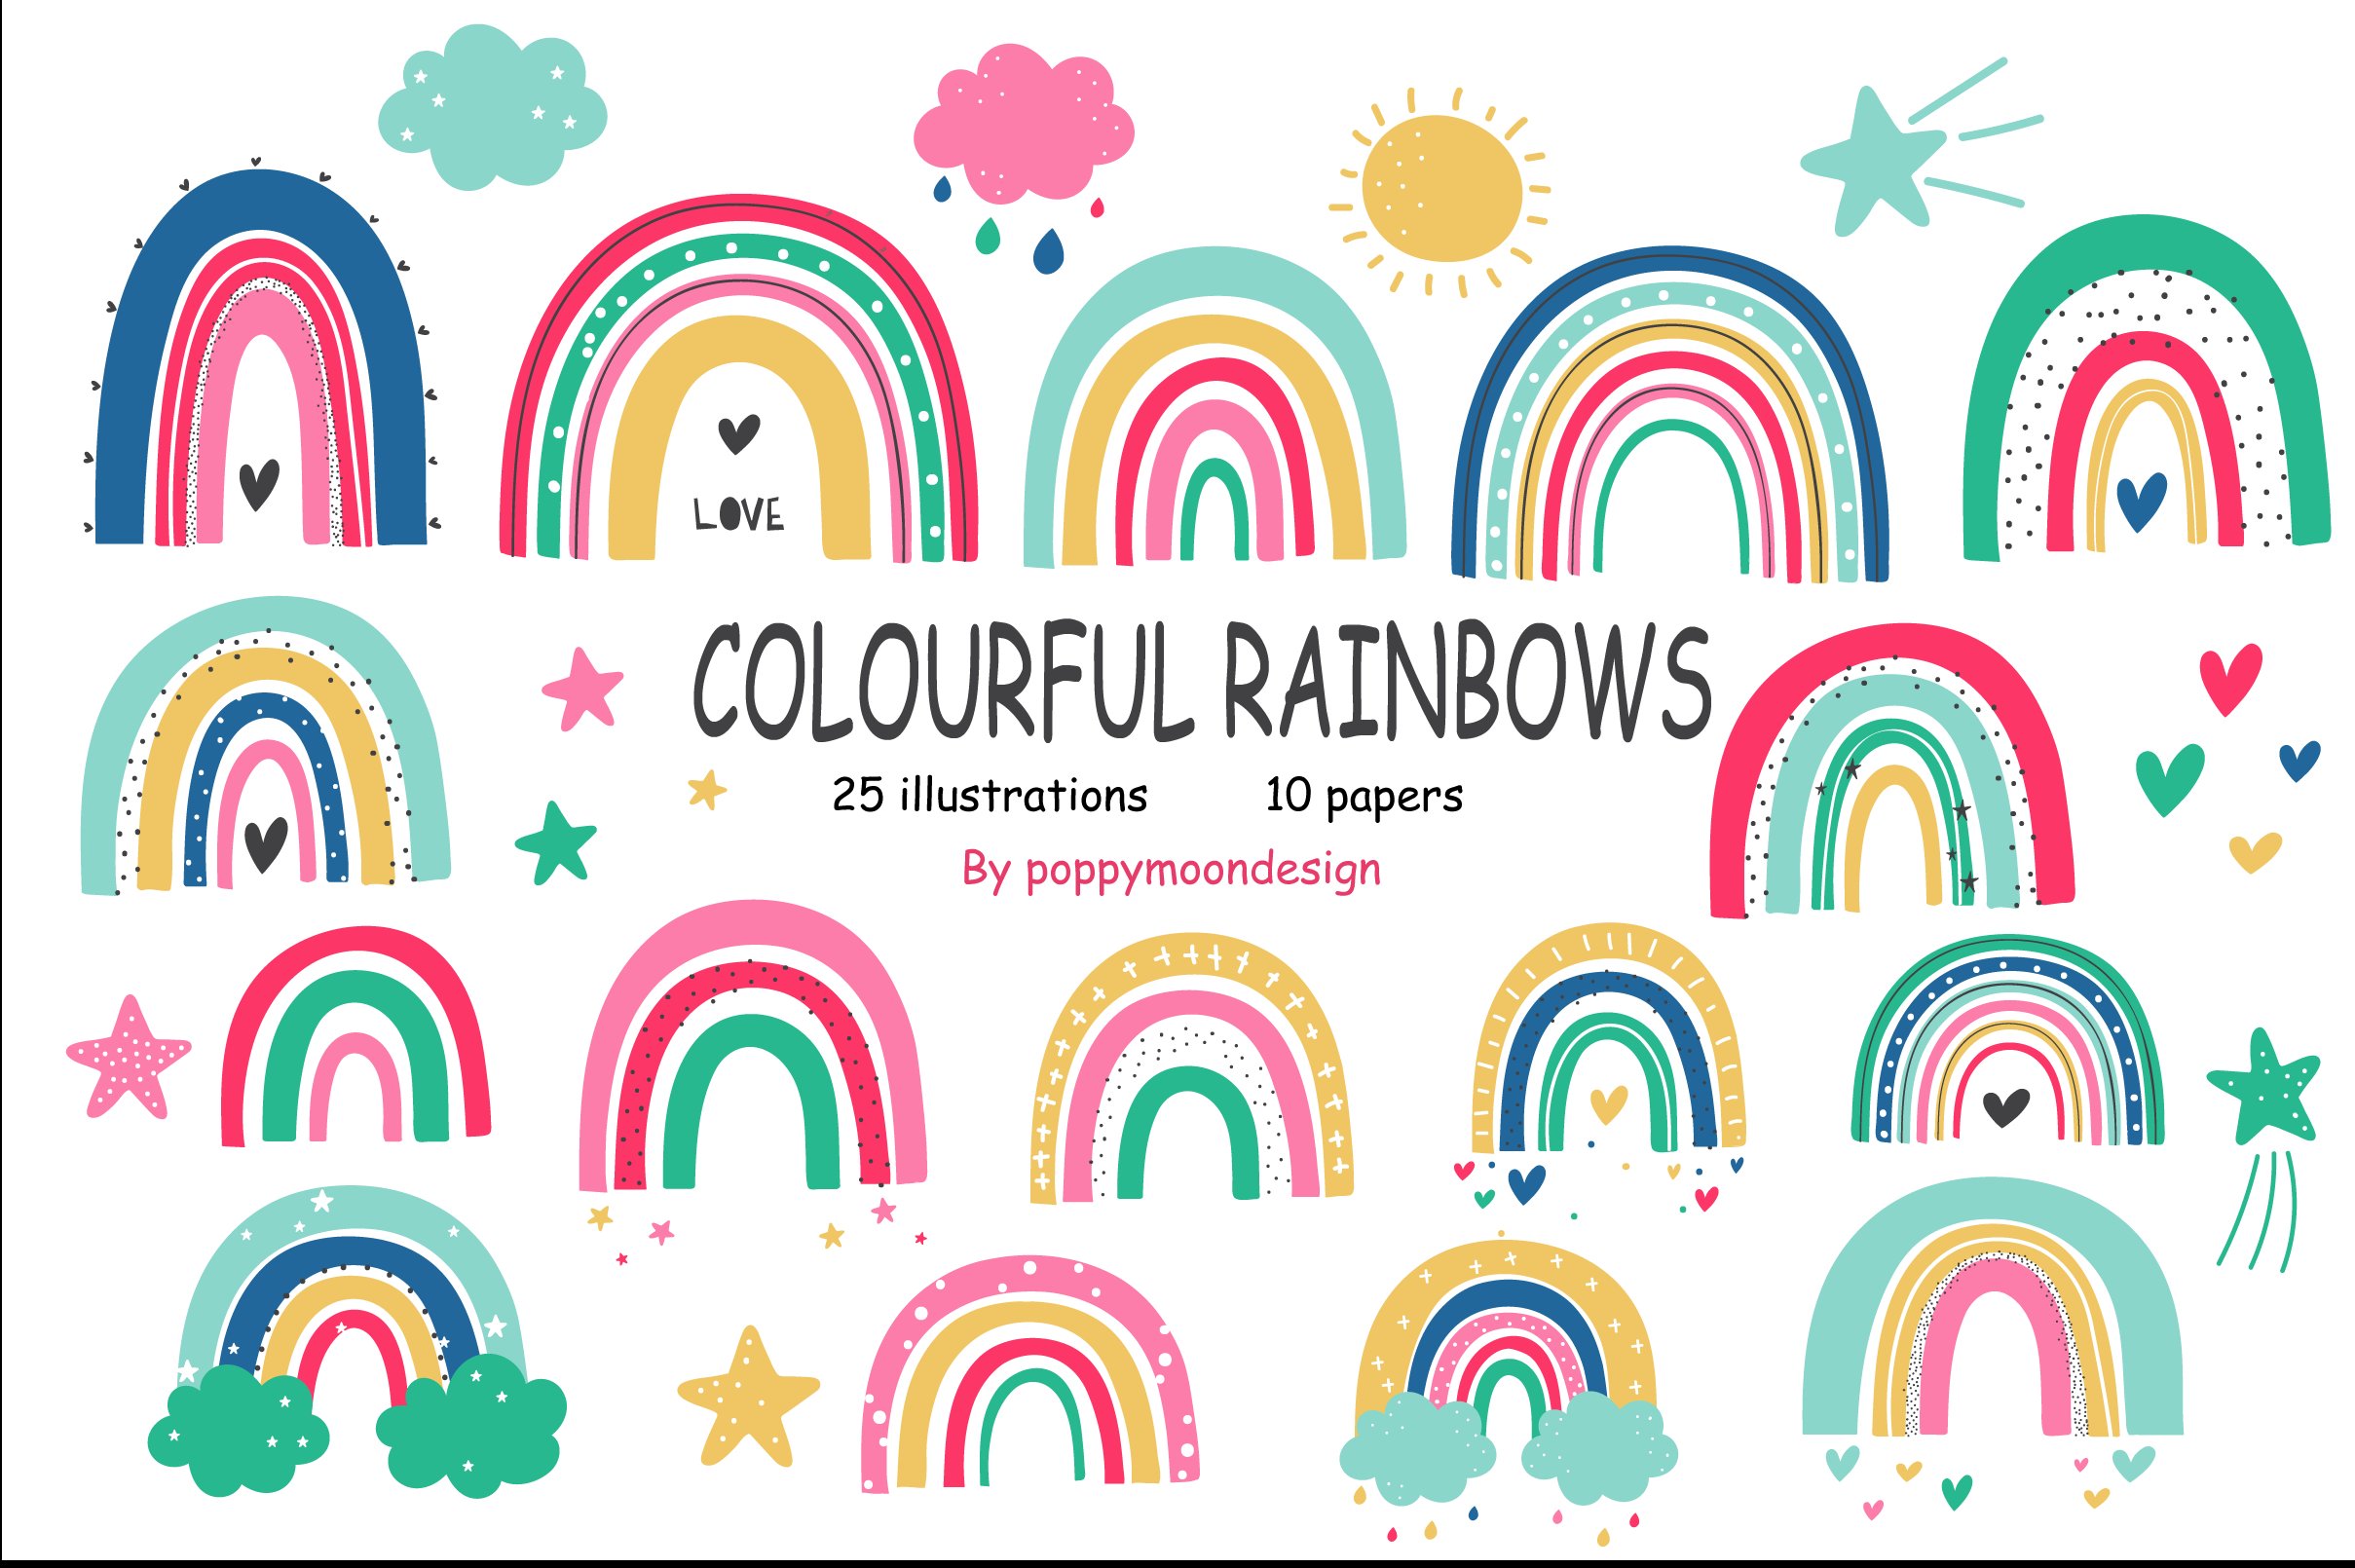 Colourful Rainbow set cover image.